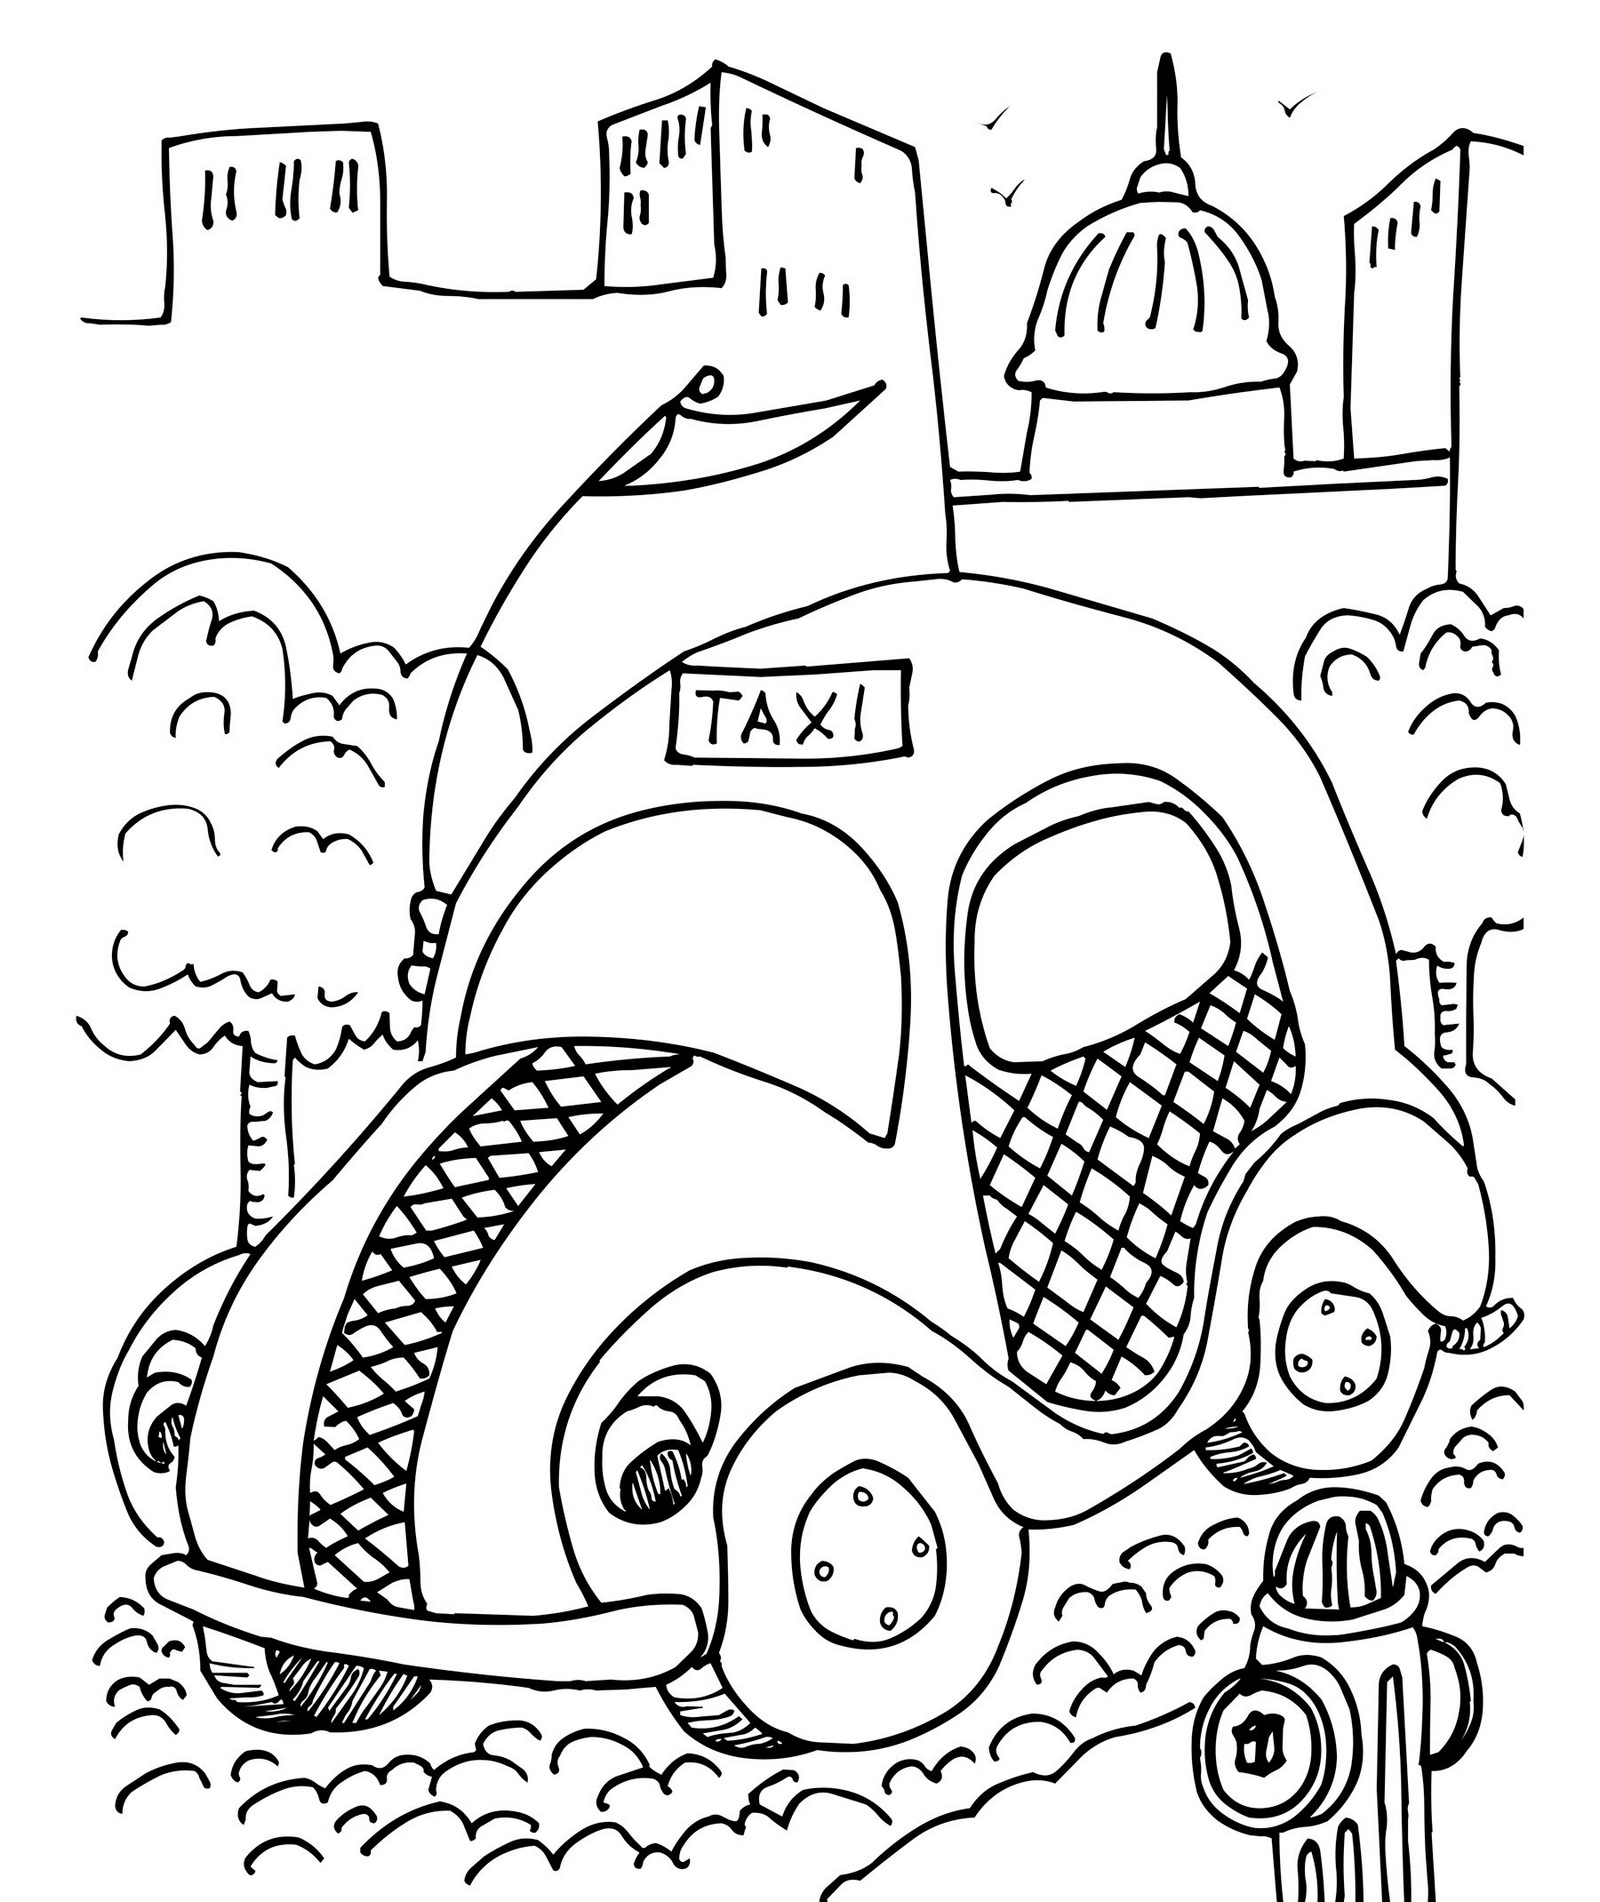 fun taxi coloring sheet for kids